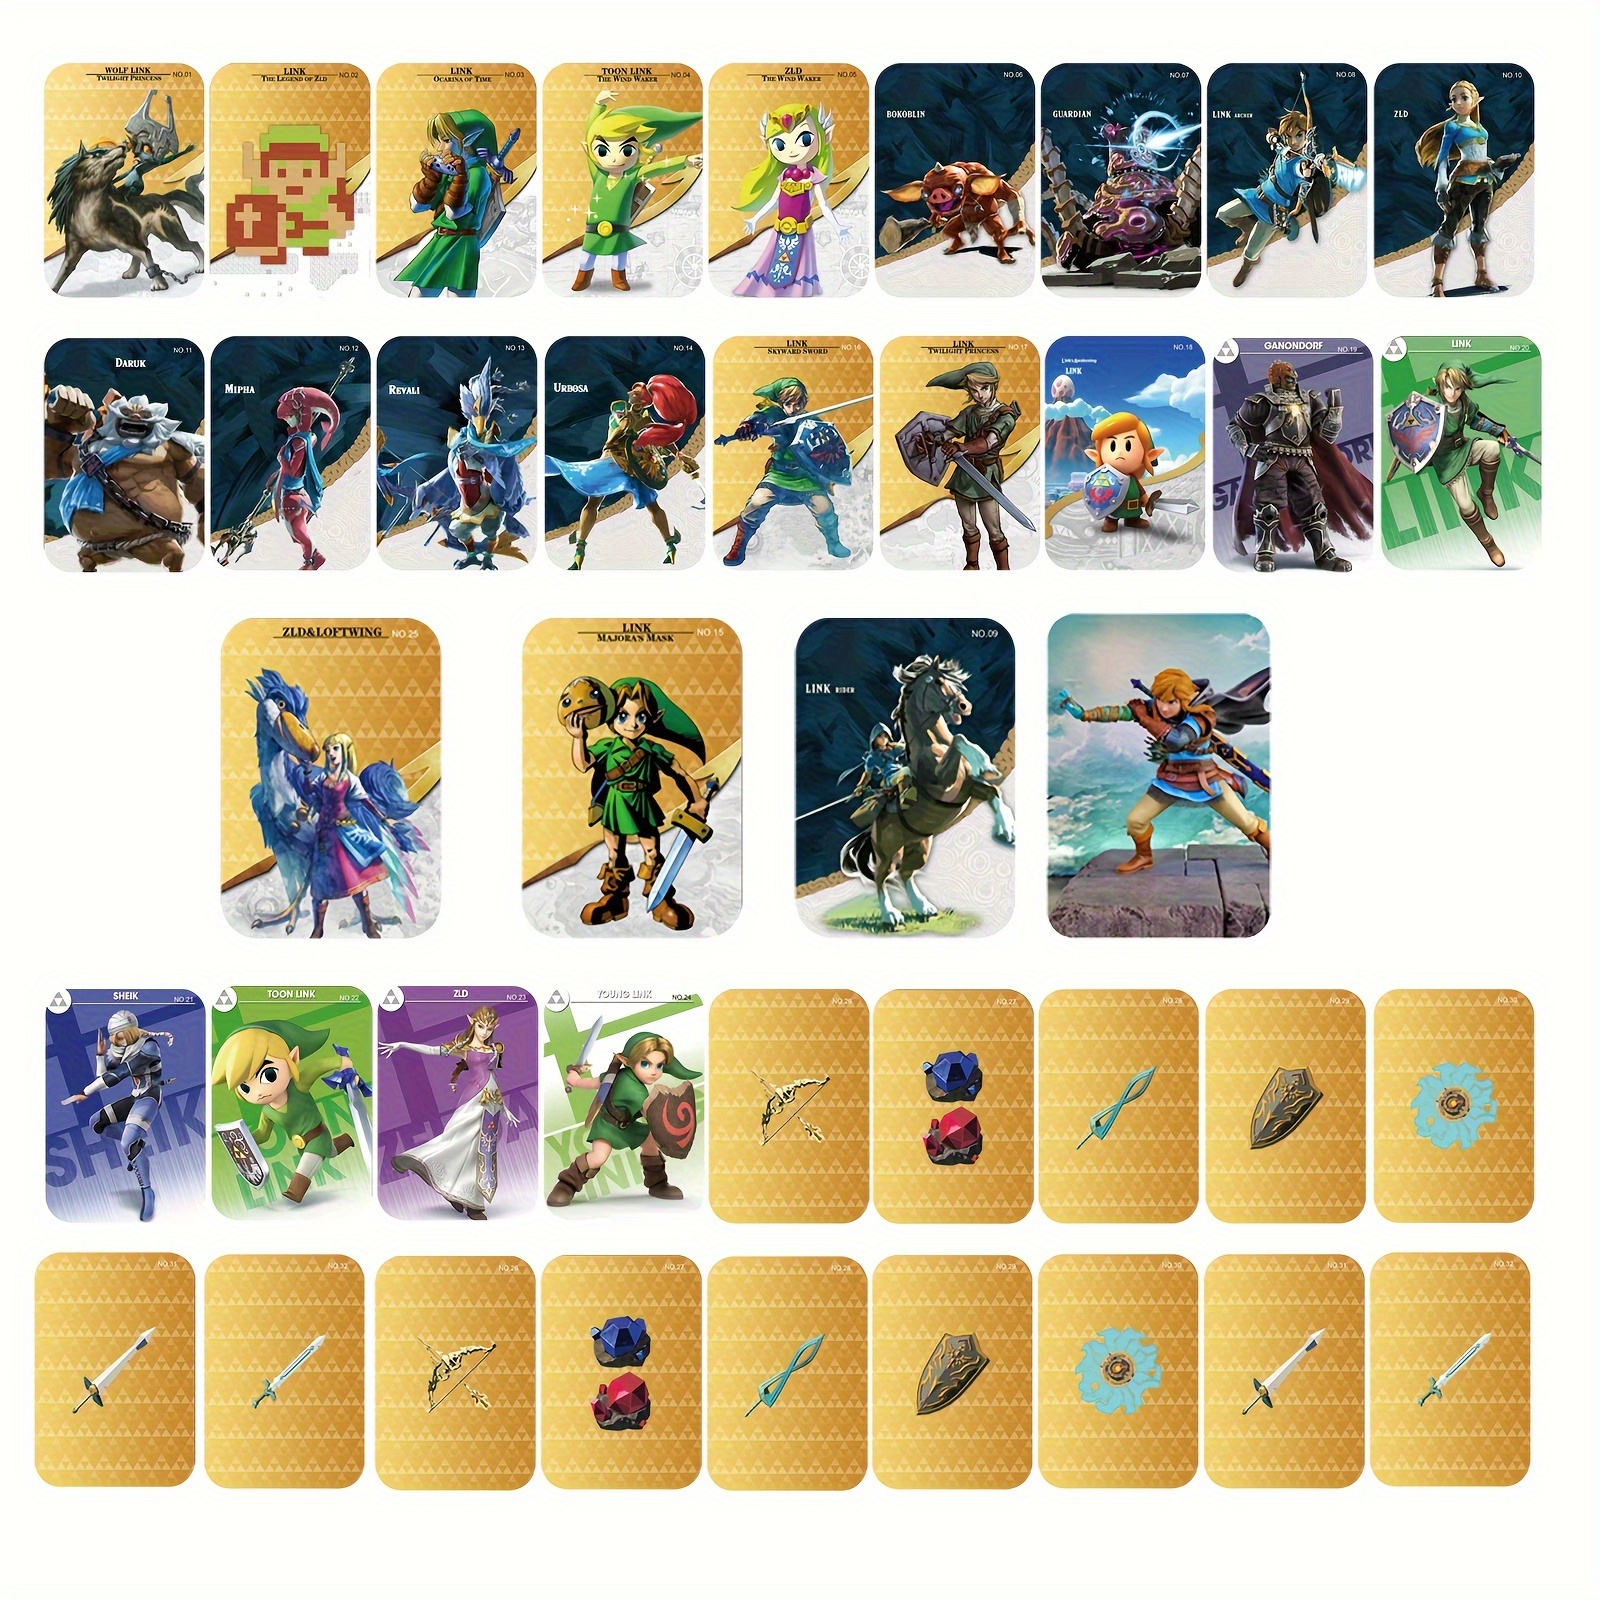 New In-Box Stock Photos for TOTK Zelda and Ganondorf : r/amiibo